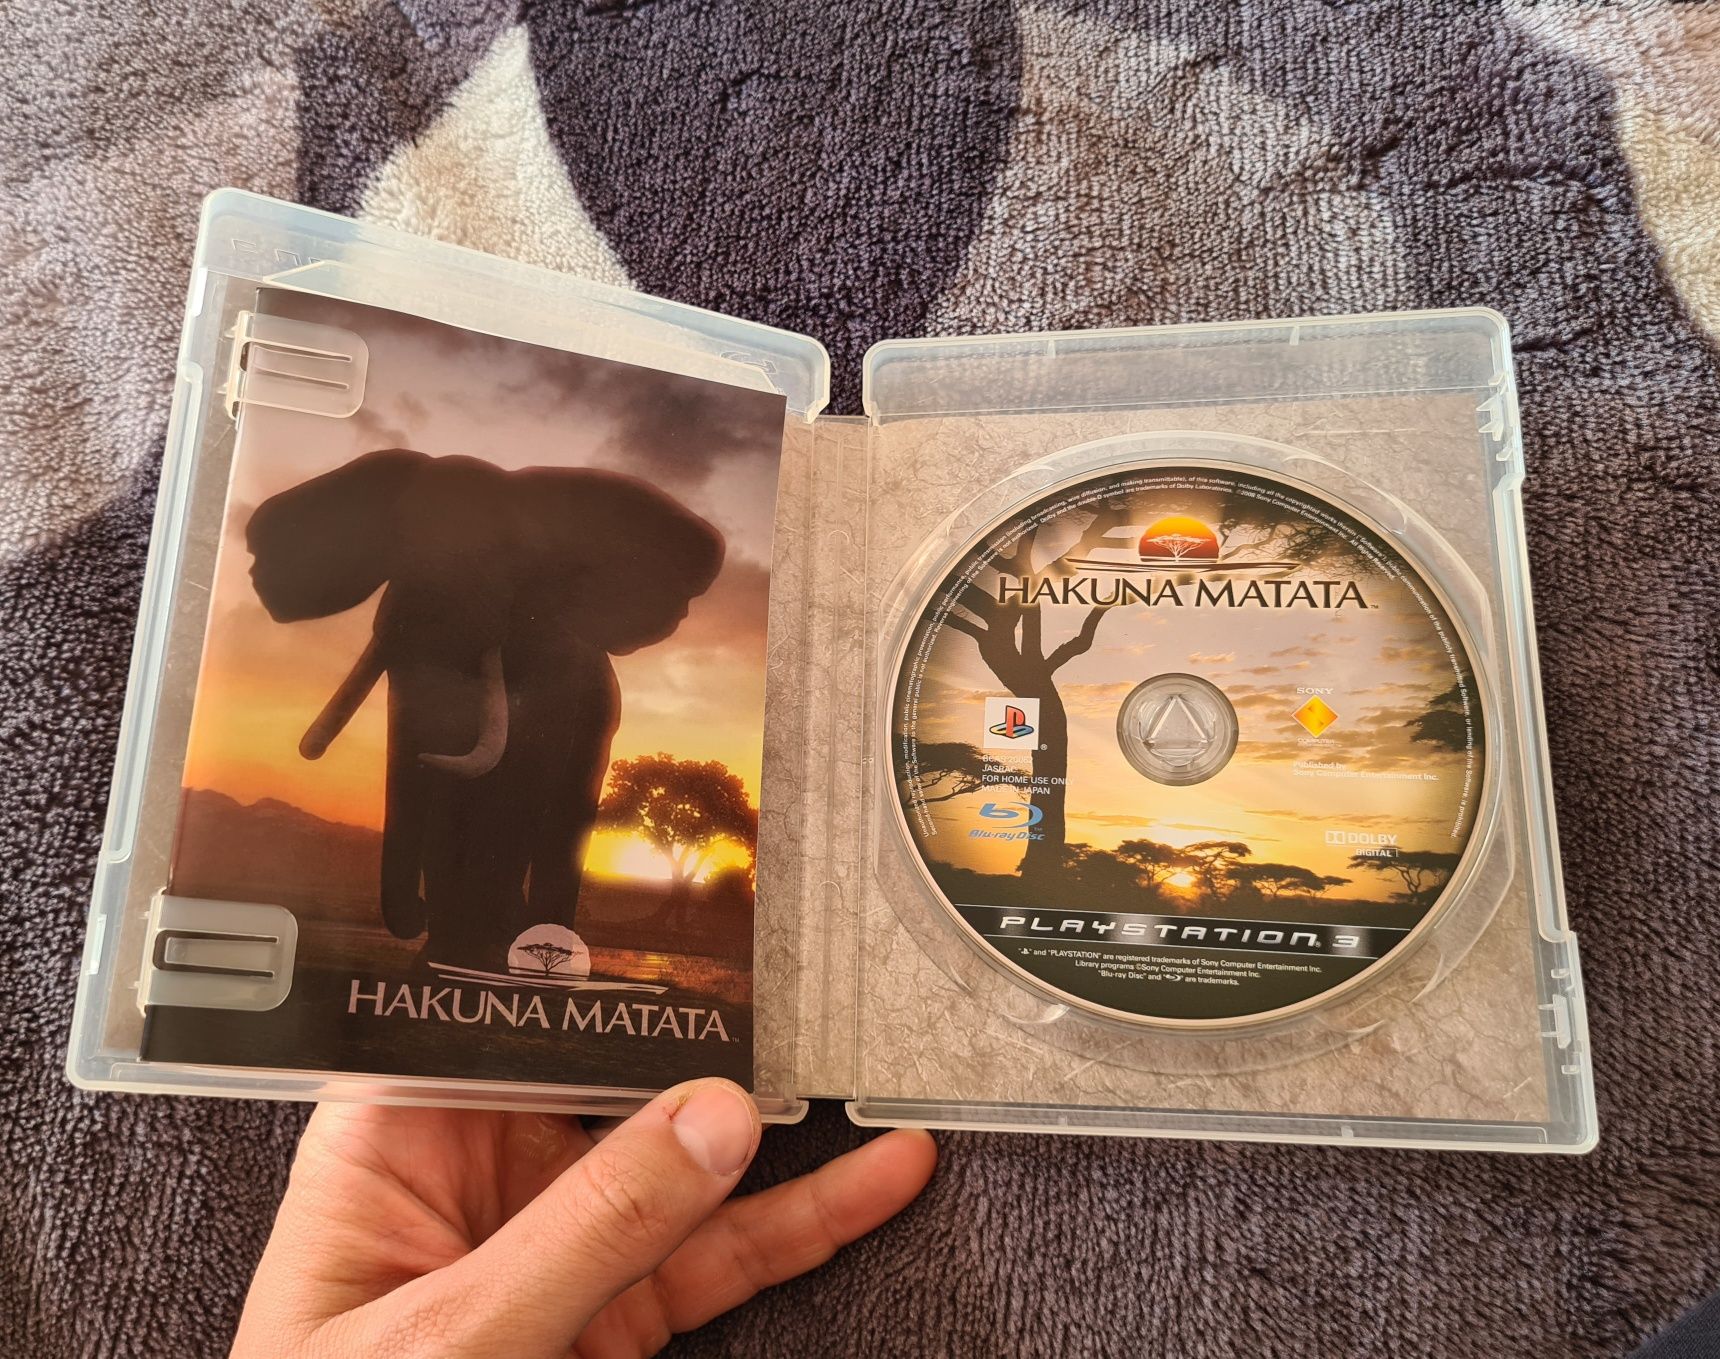 Hakuna Matata Afrika Joc Rar PlayStation 3 Ps3 Play Station 3 Sony Ps